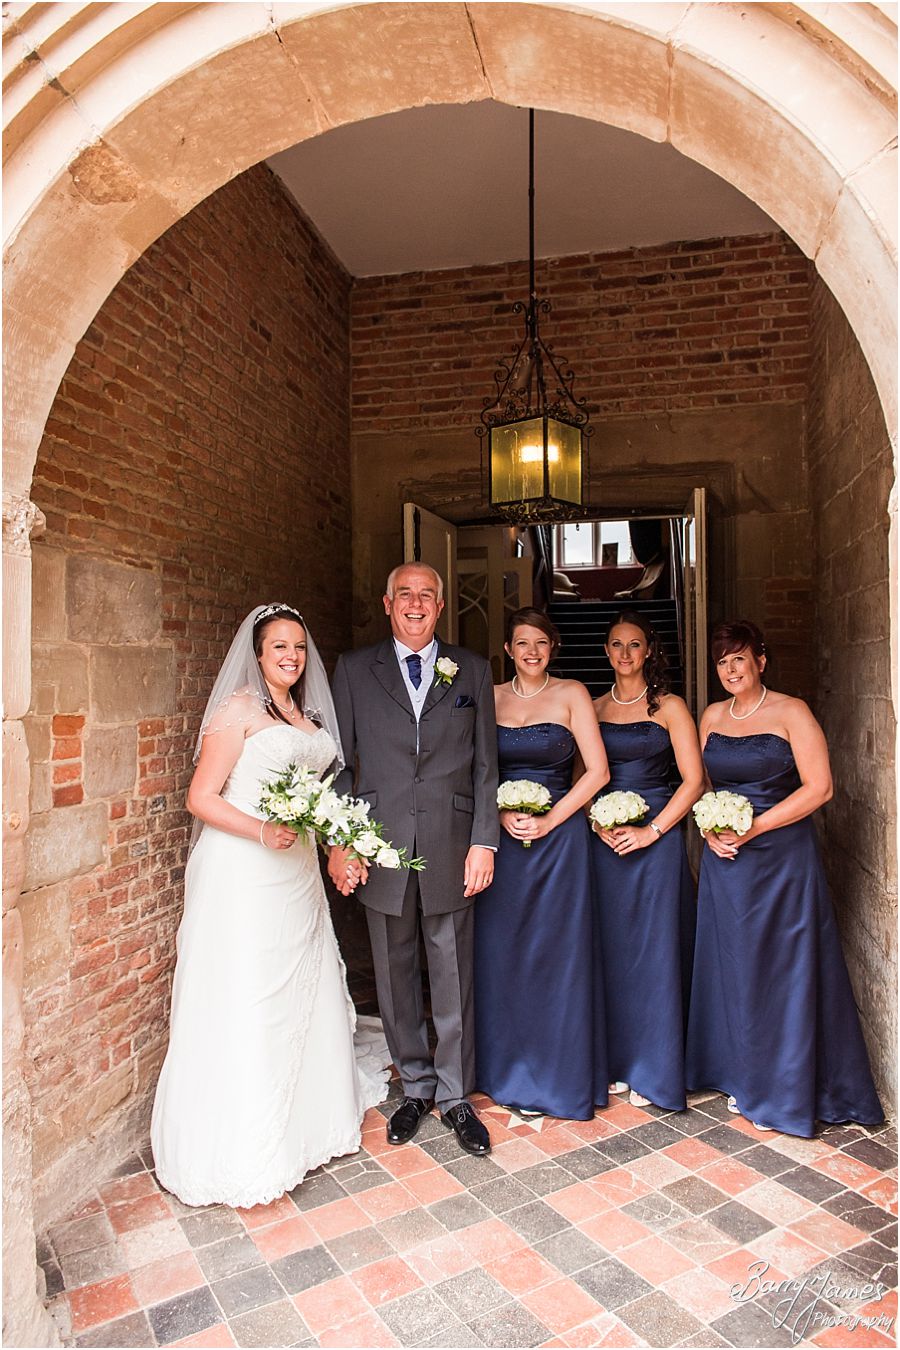 Stunning modern wedding photography at Grafton Manor in Bromsgrove by Experienced Award Winning Wedding Photographer Barry James